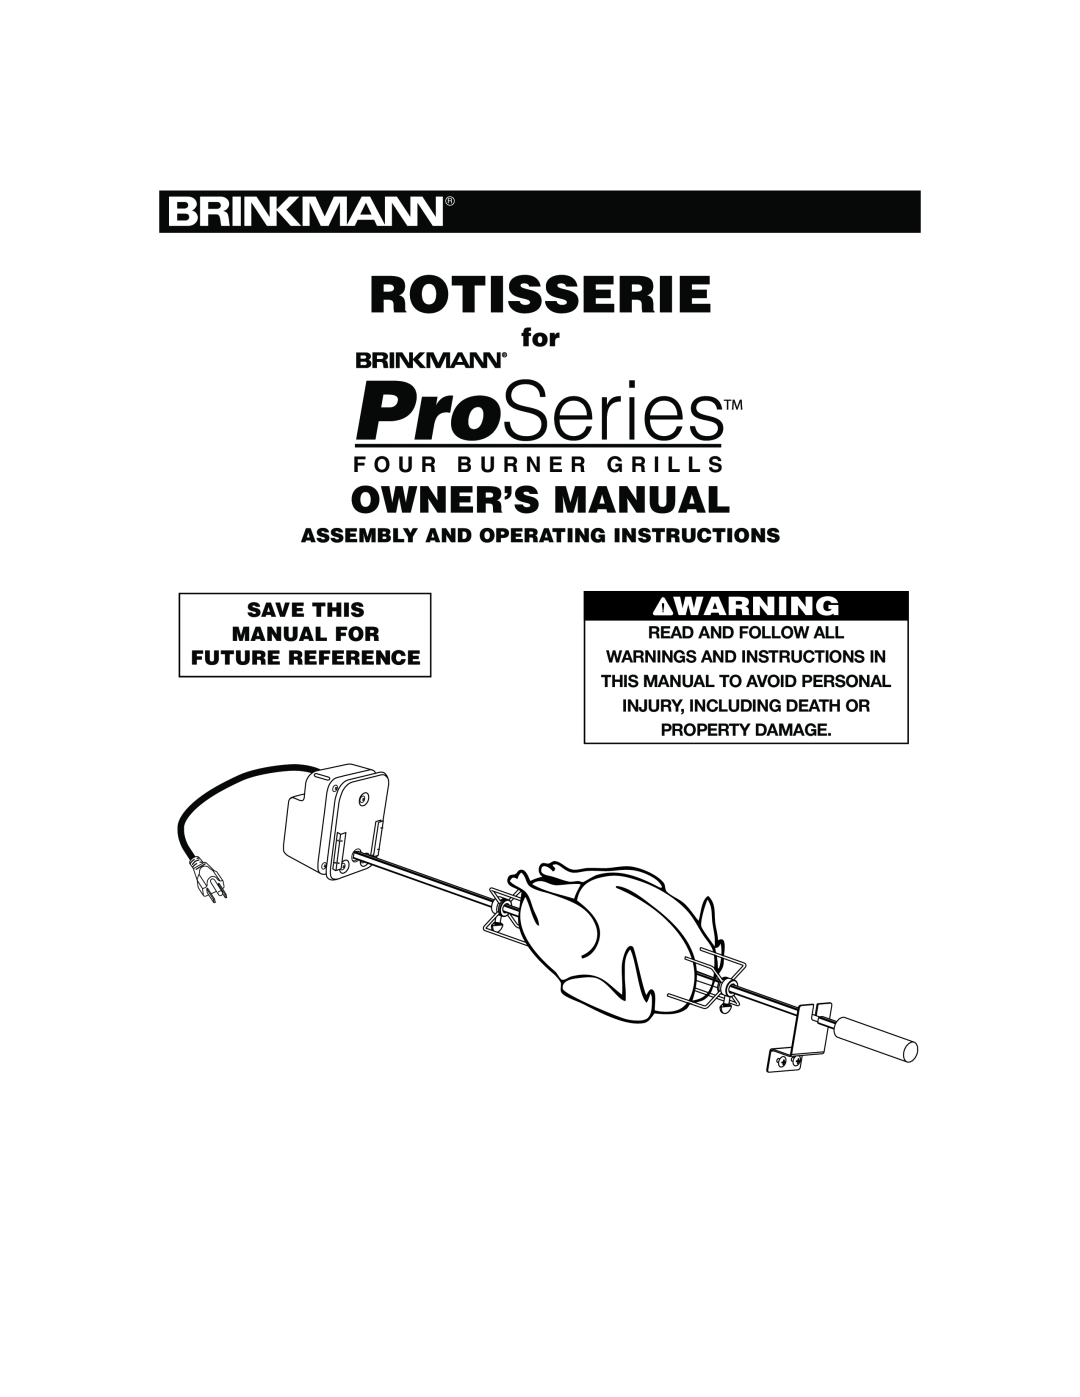 Brinkmann Grill owner manual Rotisserie, F O U R B U R N E R G R I L L S, Assembly And Operating Instructions 